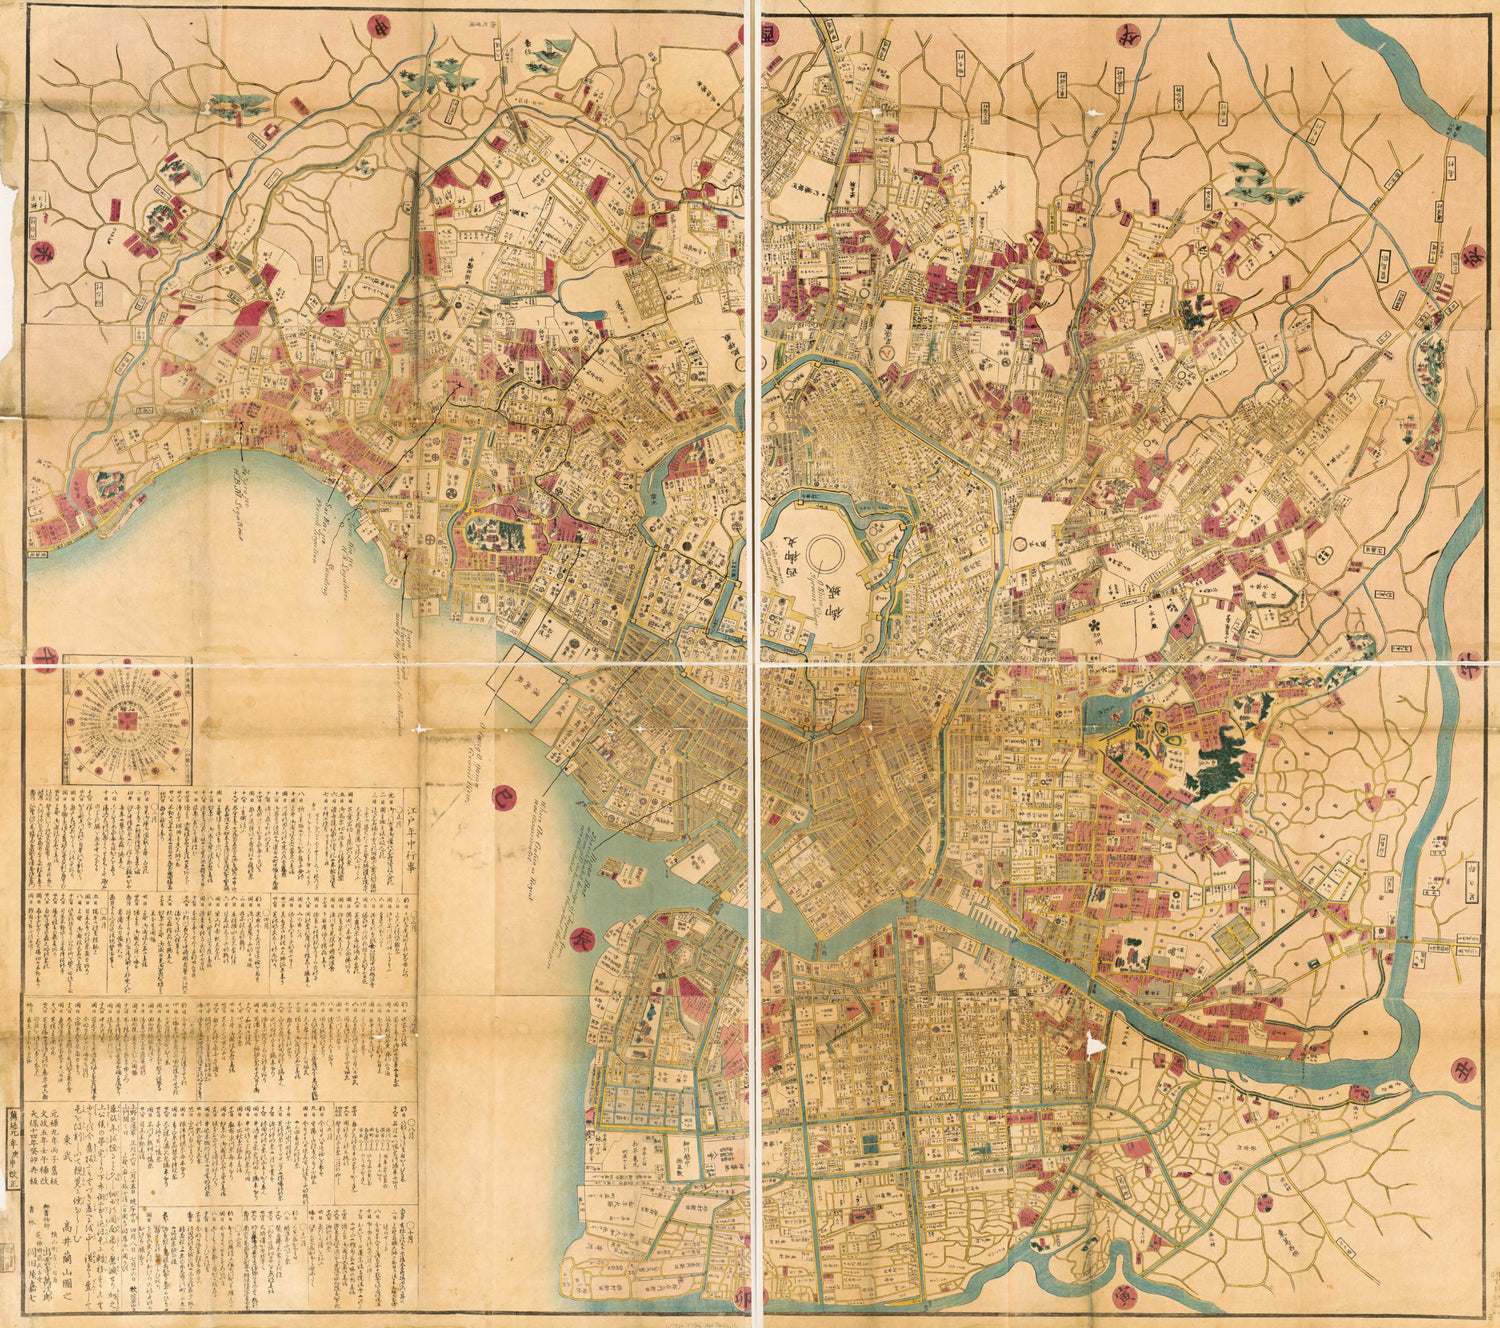 This old map of Oedo ōezu (御江戶大繪圖 /, Ansei Kaisei Oedo ōezu) from 1860 was created by Ranzan Takai in 1860